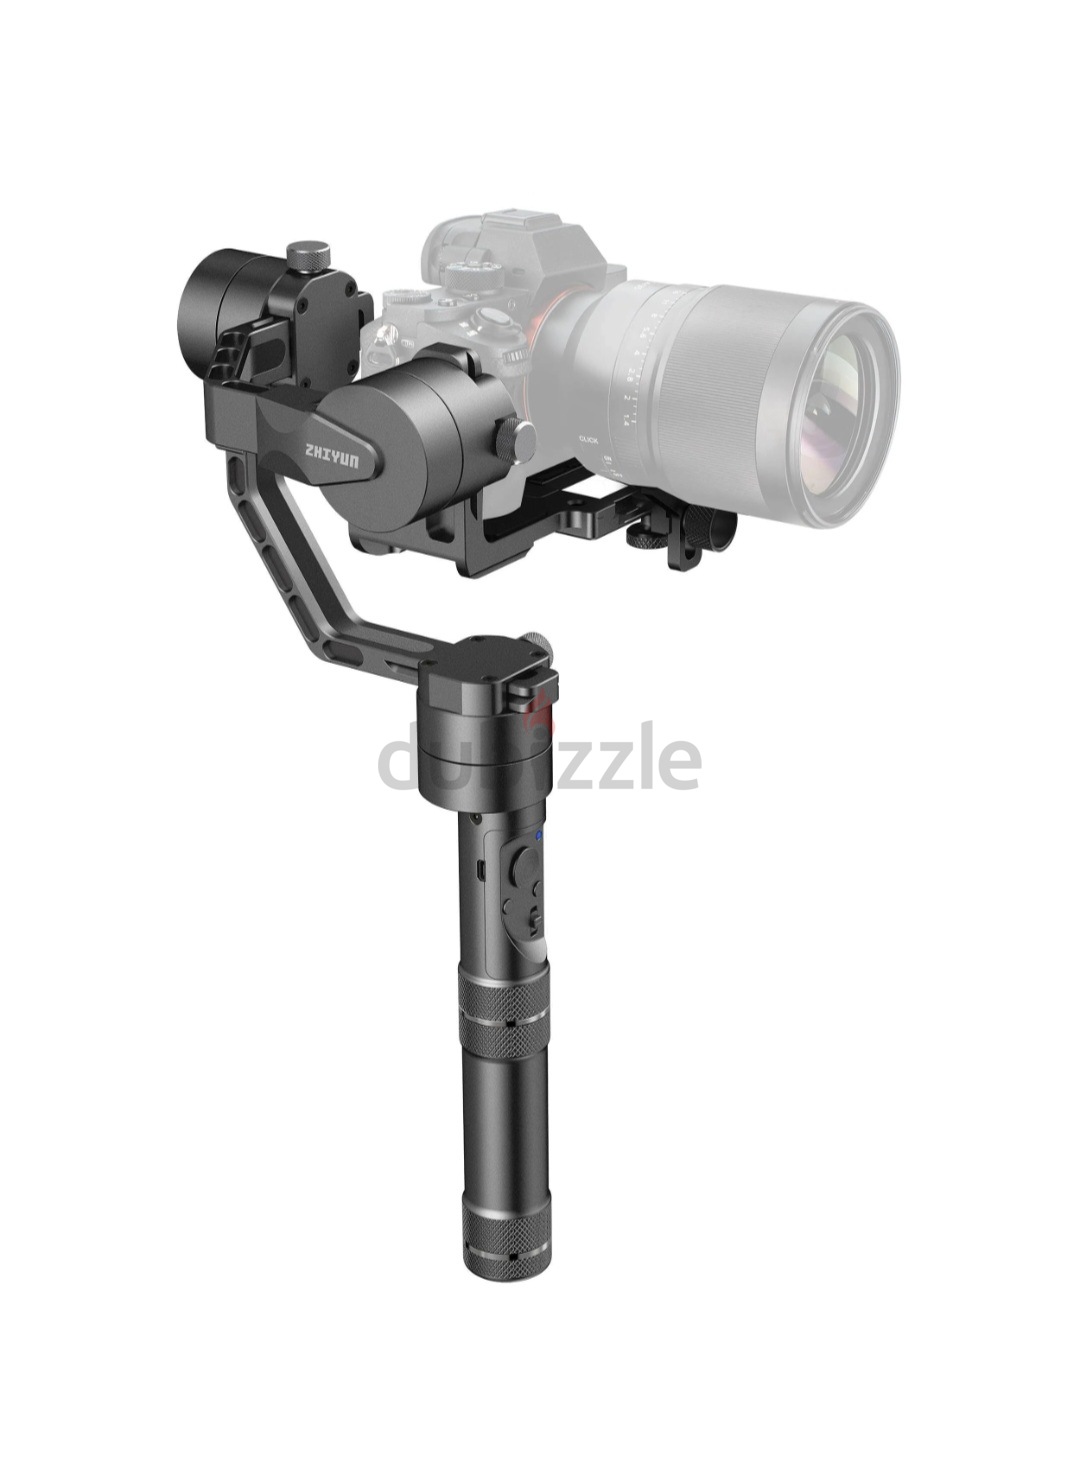 Camera stabilizer - The Zhiyun-Tech Crane v2 3-Axis Handheld Gimbal  Stabilizer | dubizzle